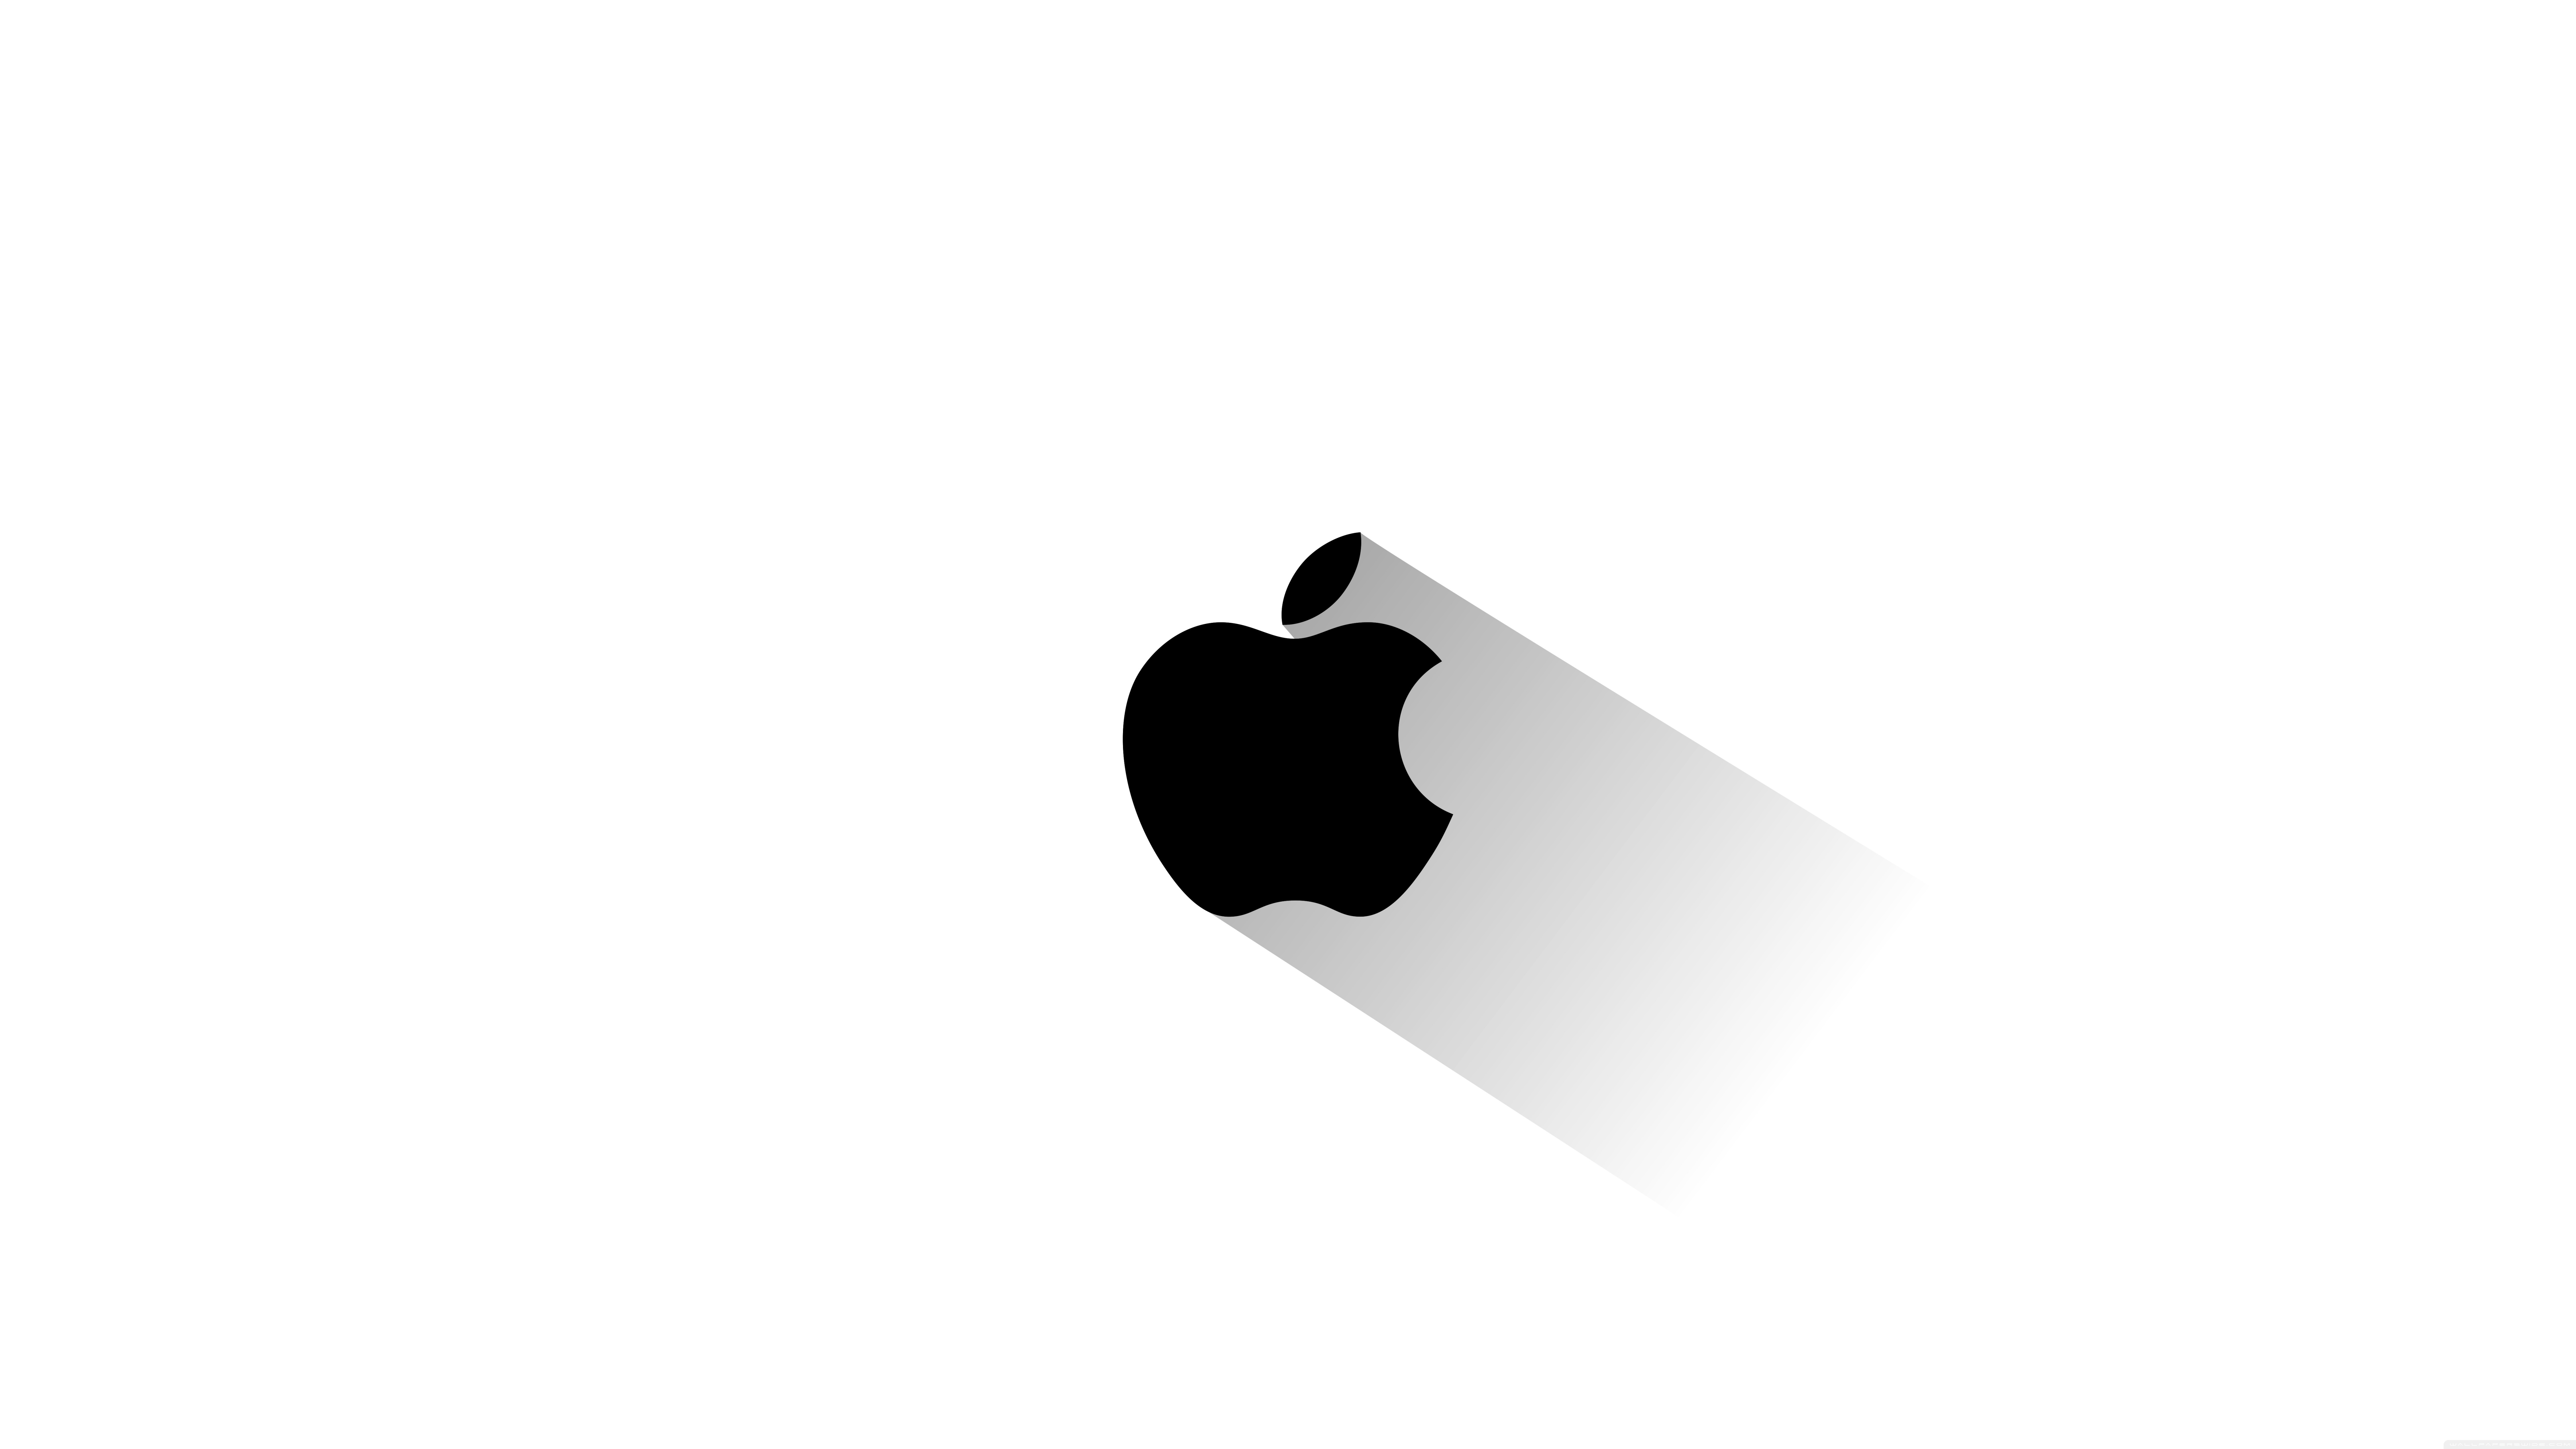 Imac Mac OS X Simple Minimalism White 7680x4320